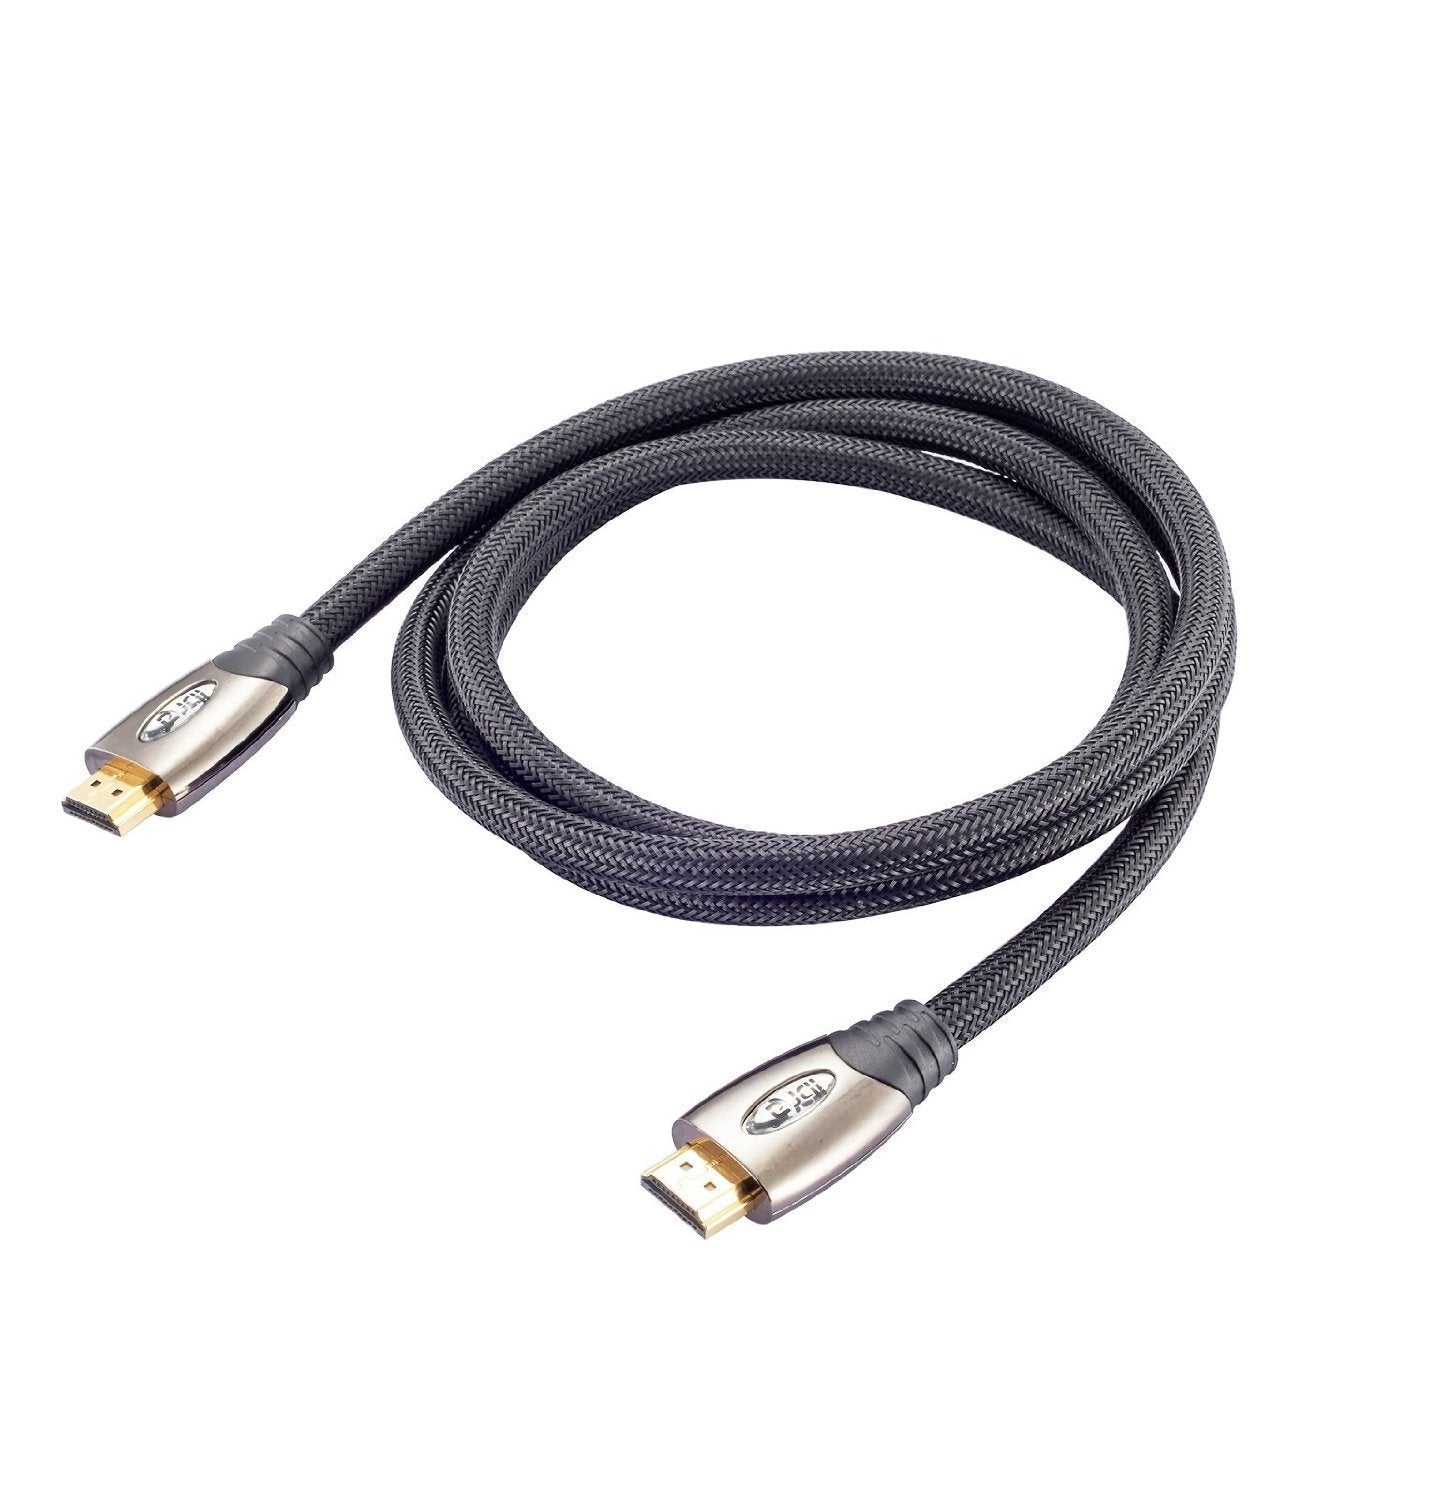 High Speed HDMI Cable v2.0/1.4a 18Gbps 3D TV 2160p PS4 SKY HD 4K@60Hz Ultra HD Ethernet Audio Return Virgin BT Gold Connectors Nylon Braided - 4M - IBRA PLATINUM